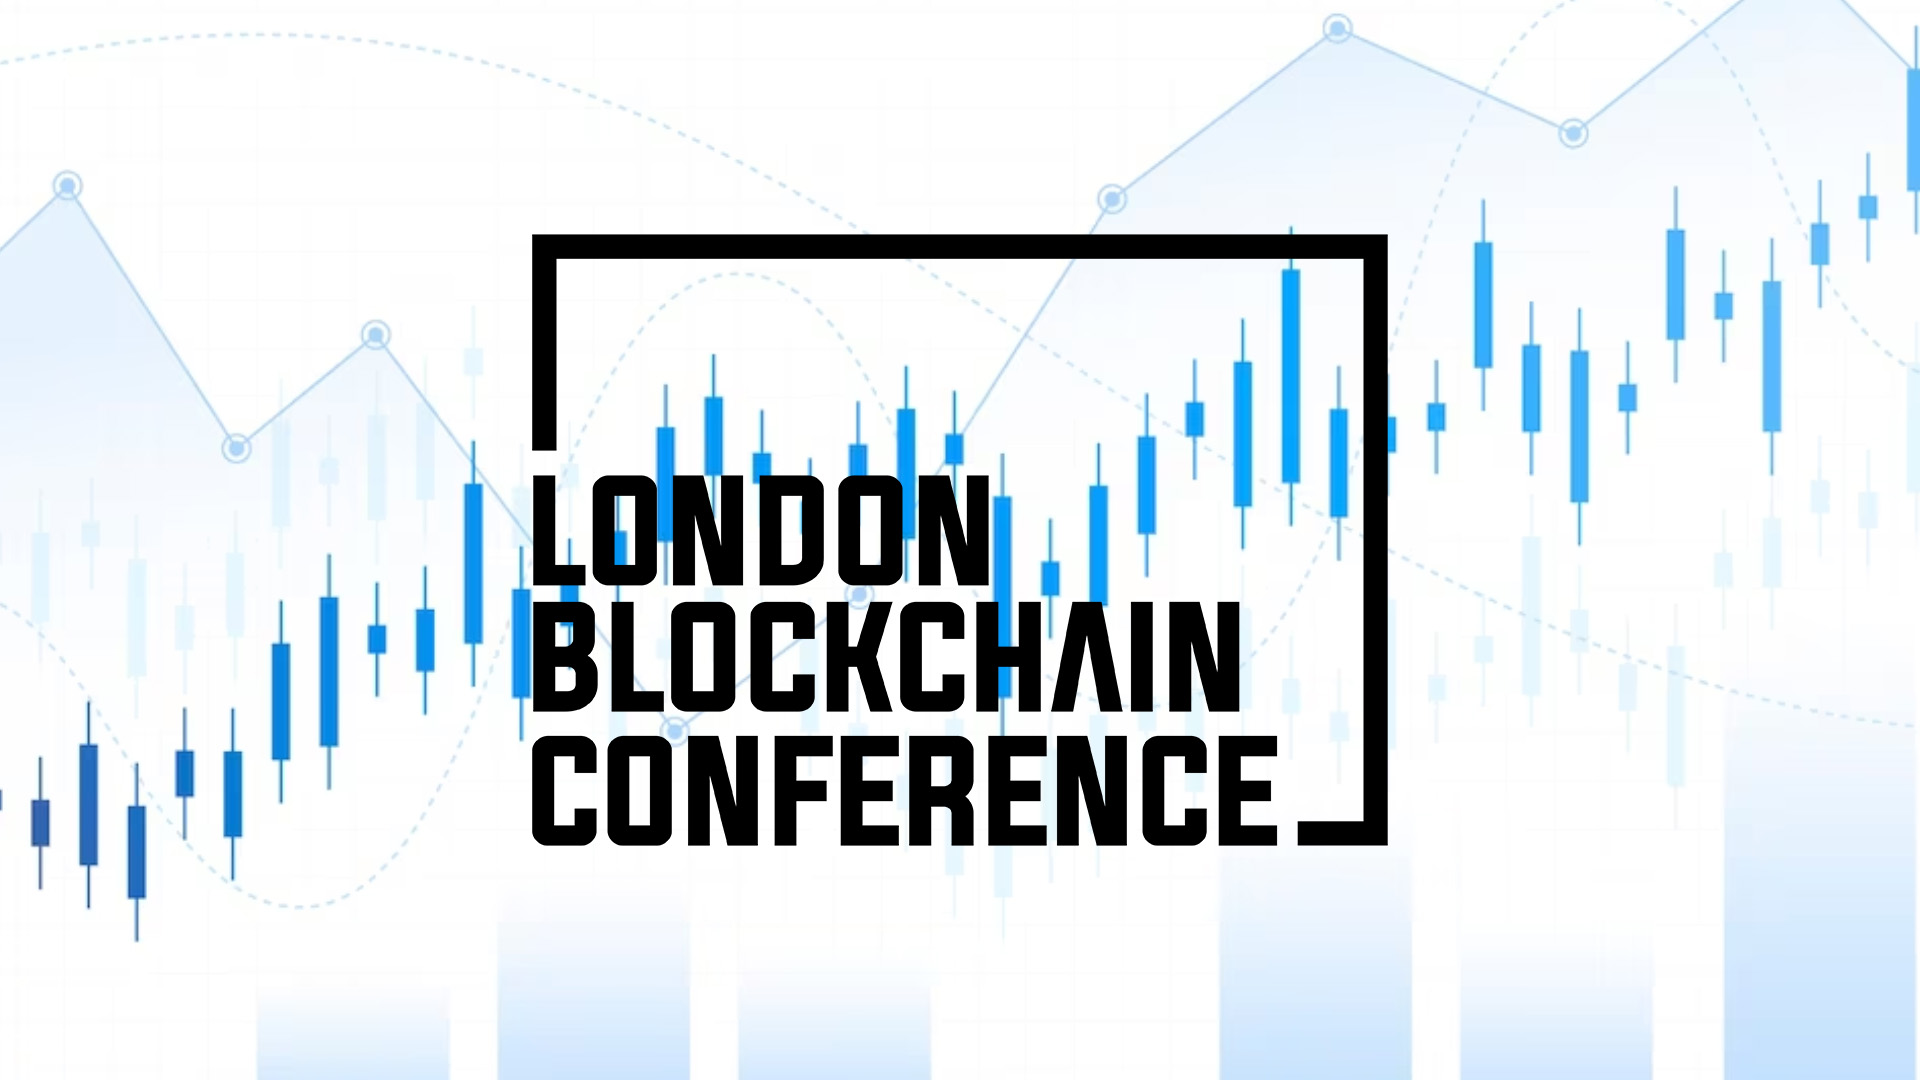 London Blockchain Conference: Effectively Using BSV Blockchain